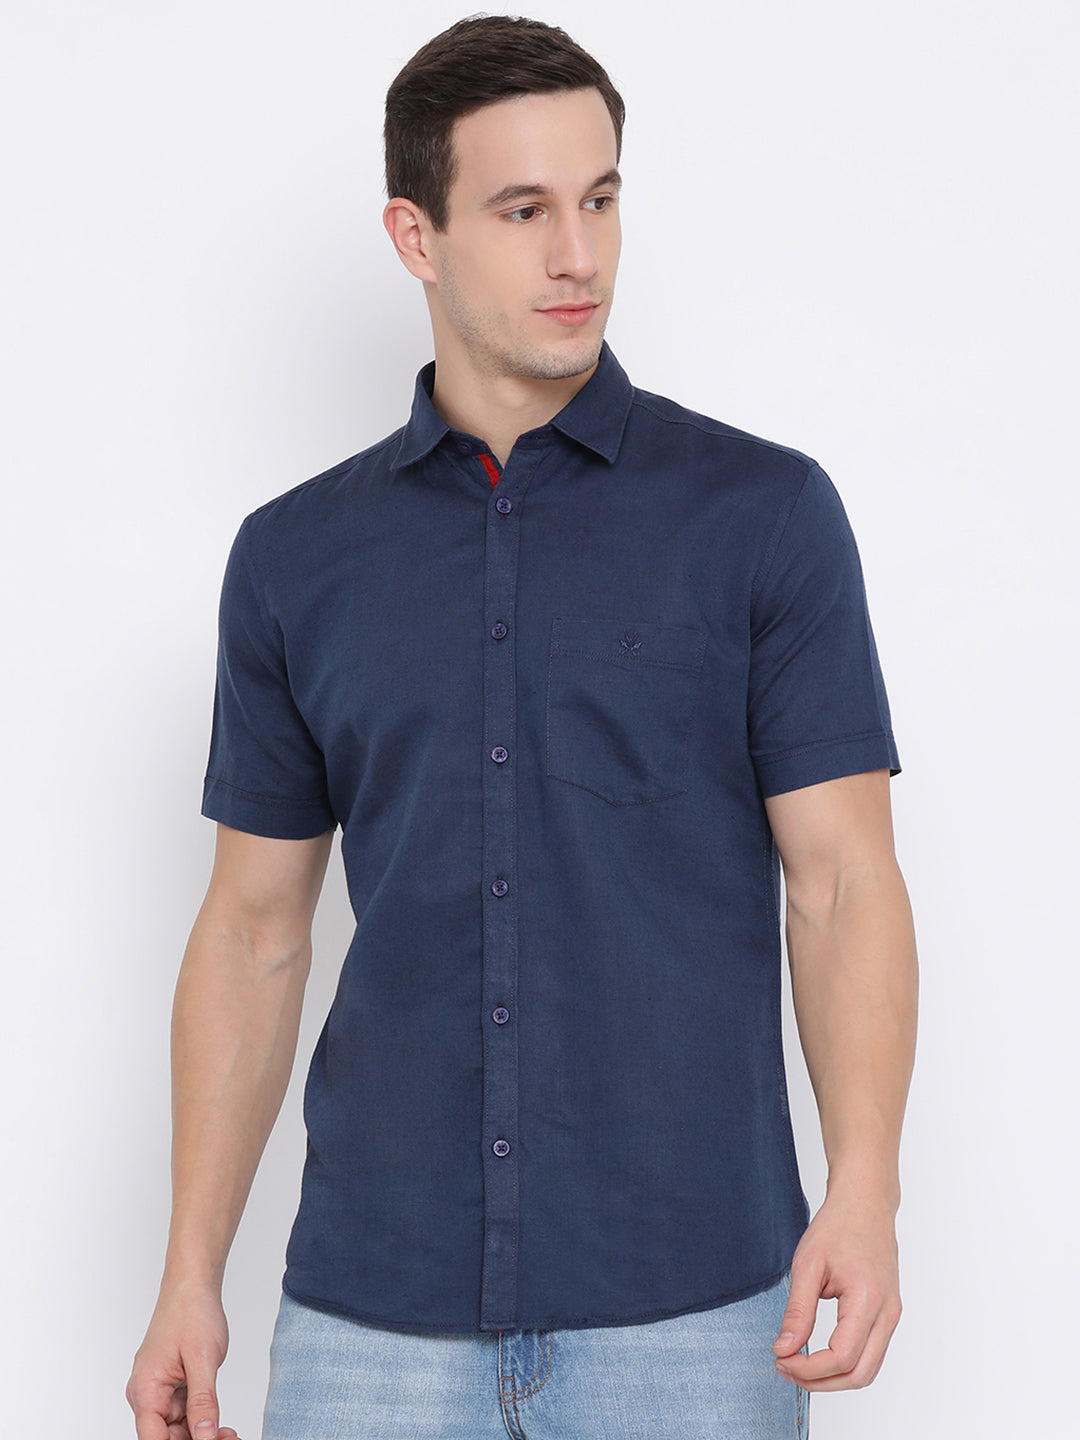 Navy Blue Spread Collar Slim Fit Shirt - Men Shirts